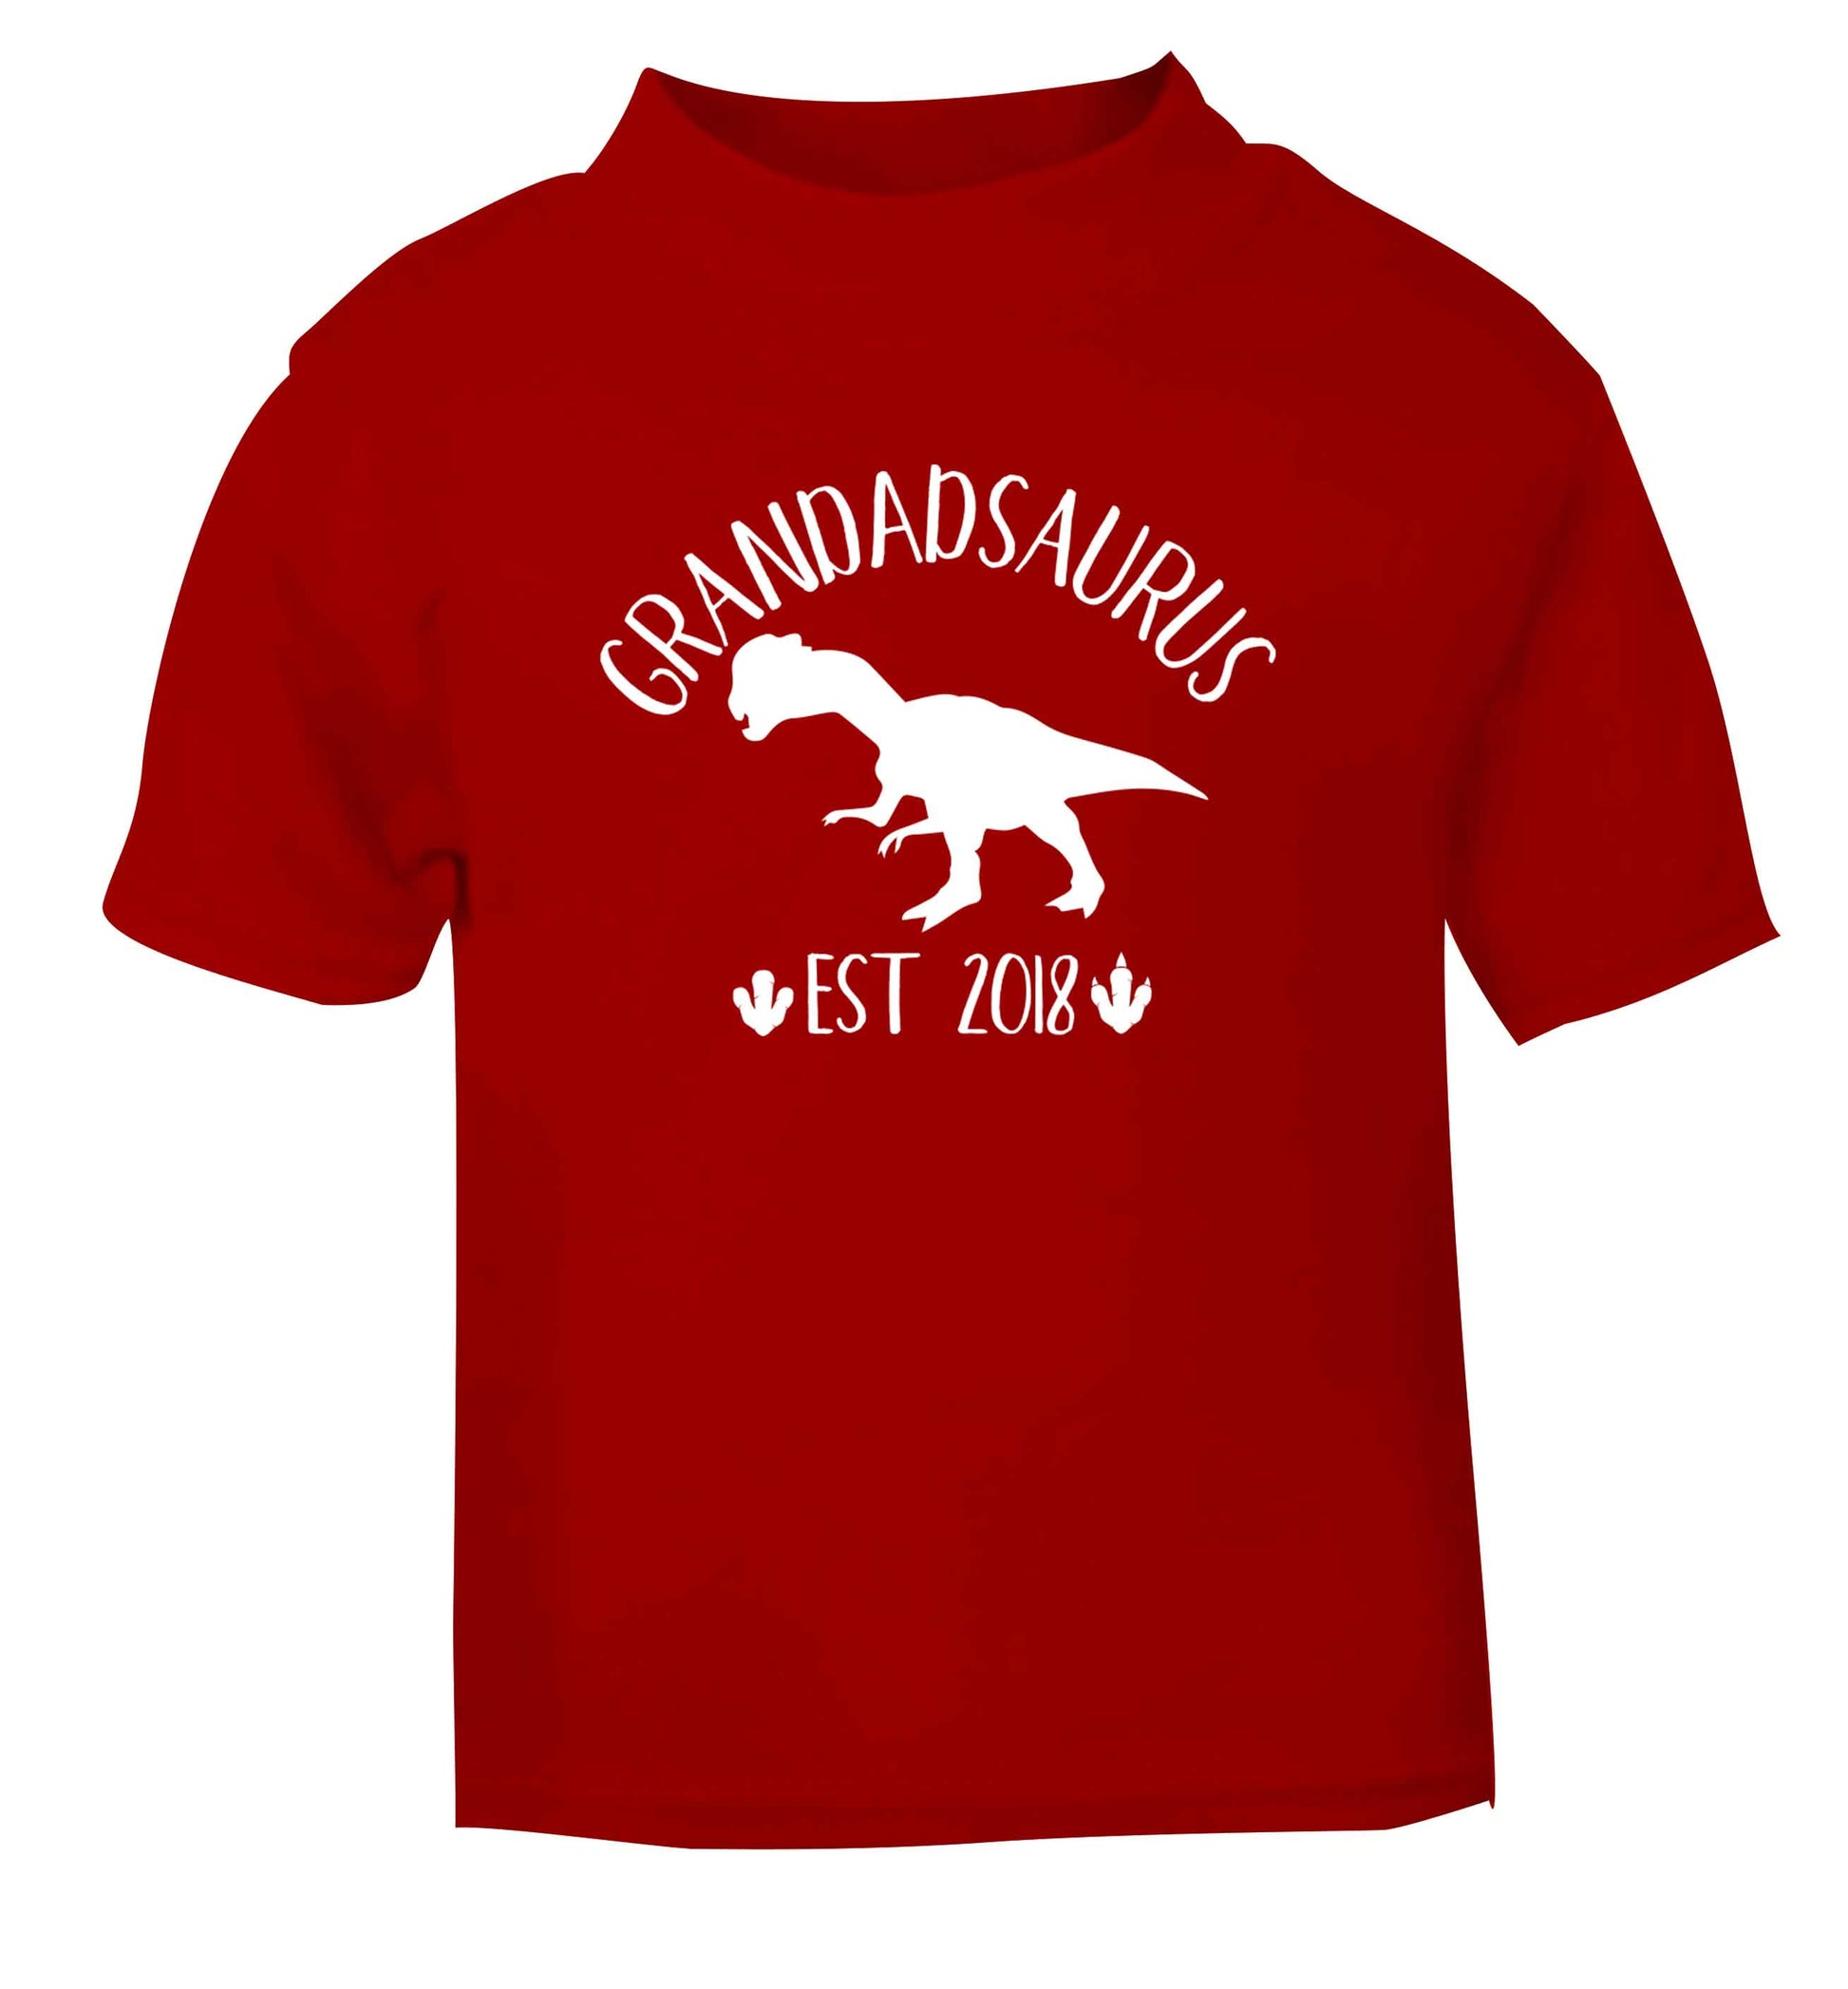 Personalised grandadsaurus since (custom date) red Baby Toddler Tshirt 2 Years